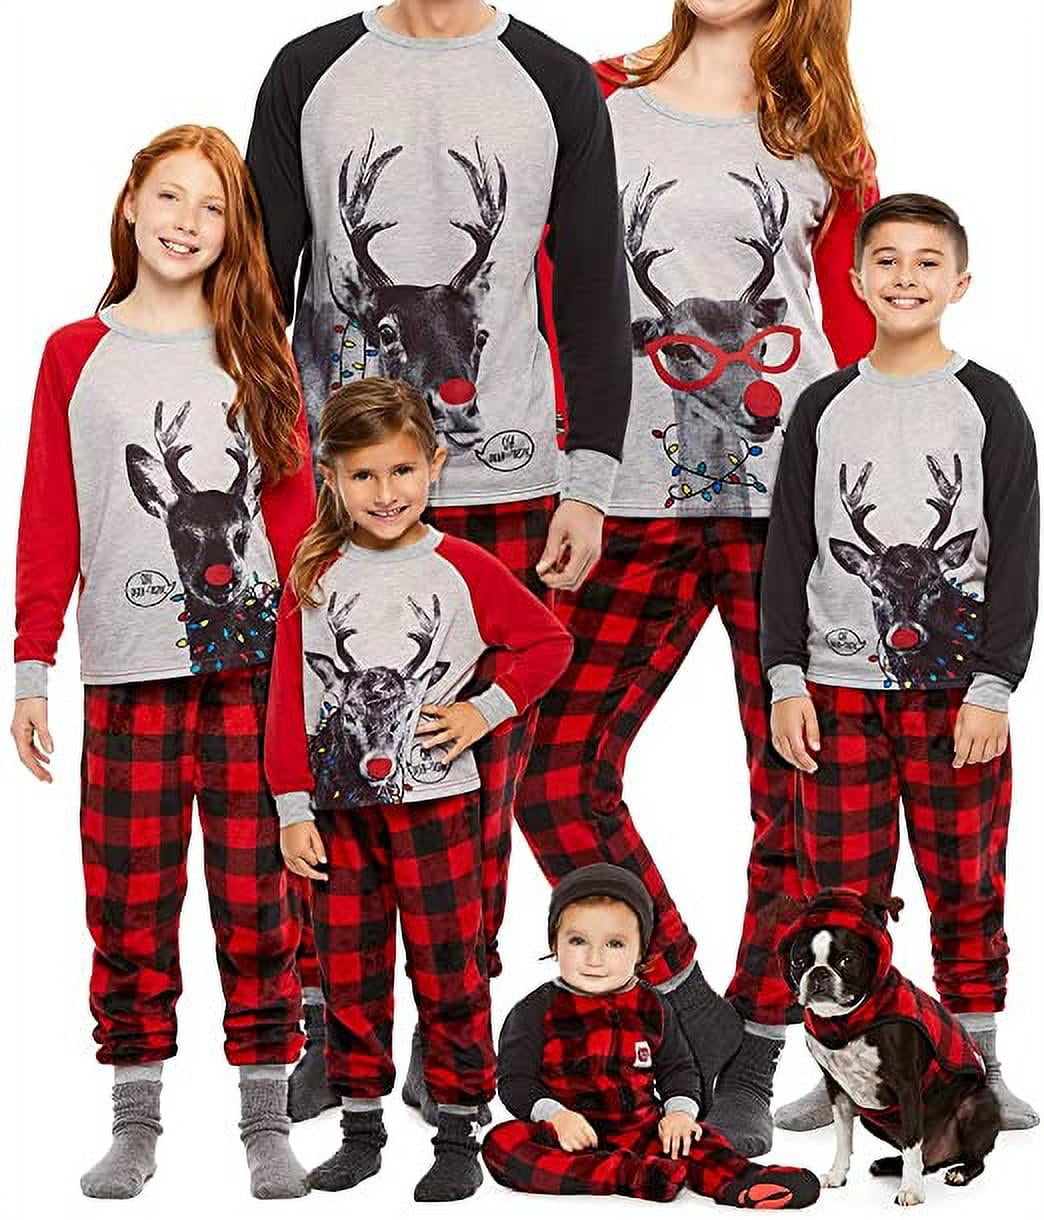 Christmas Family Pajamas Sets Elk Top Red Plaid Pants Christmas Holiday Matching Pajamas Clothes Sets 